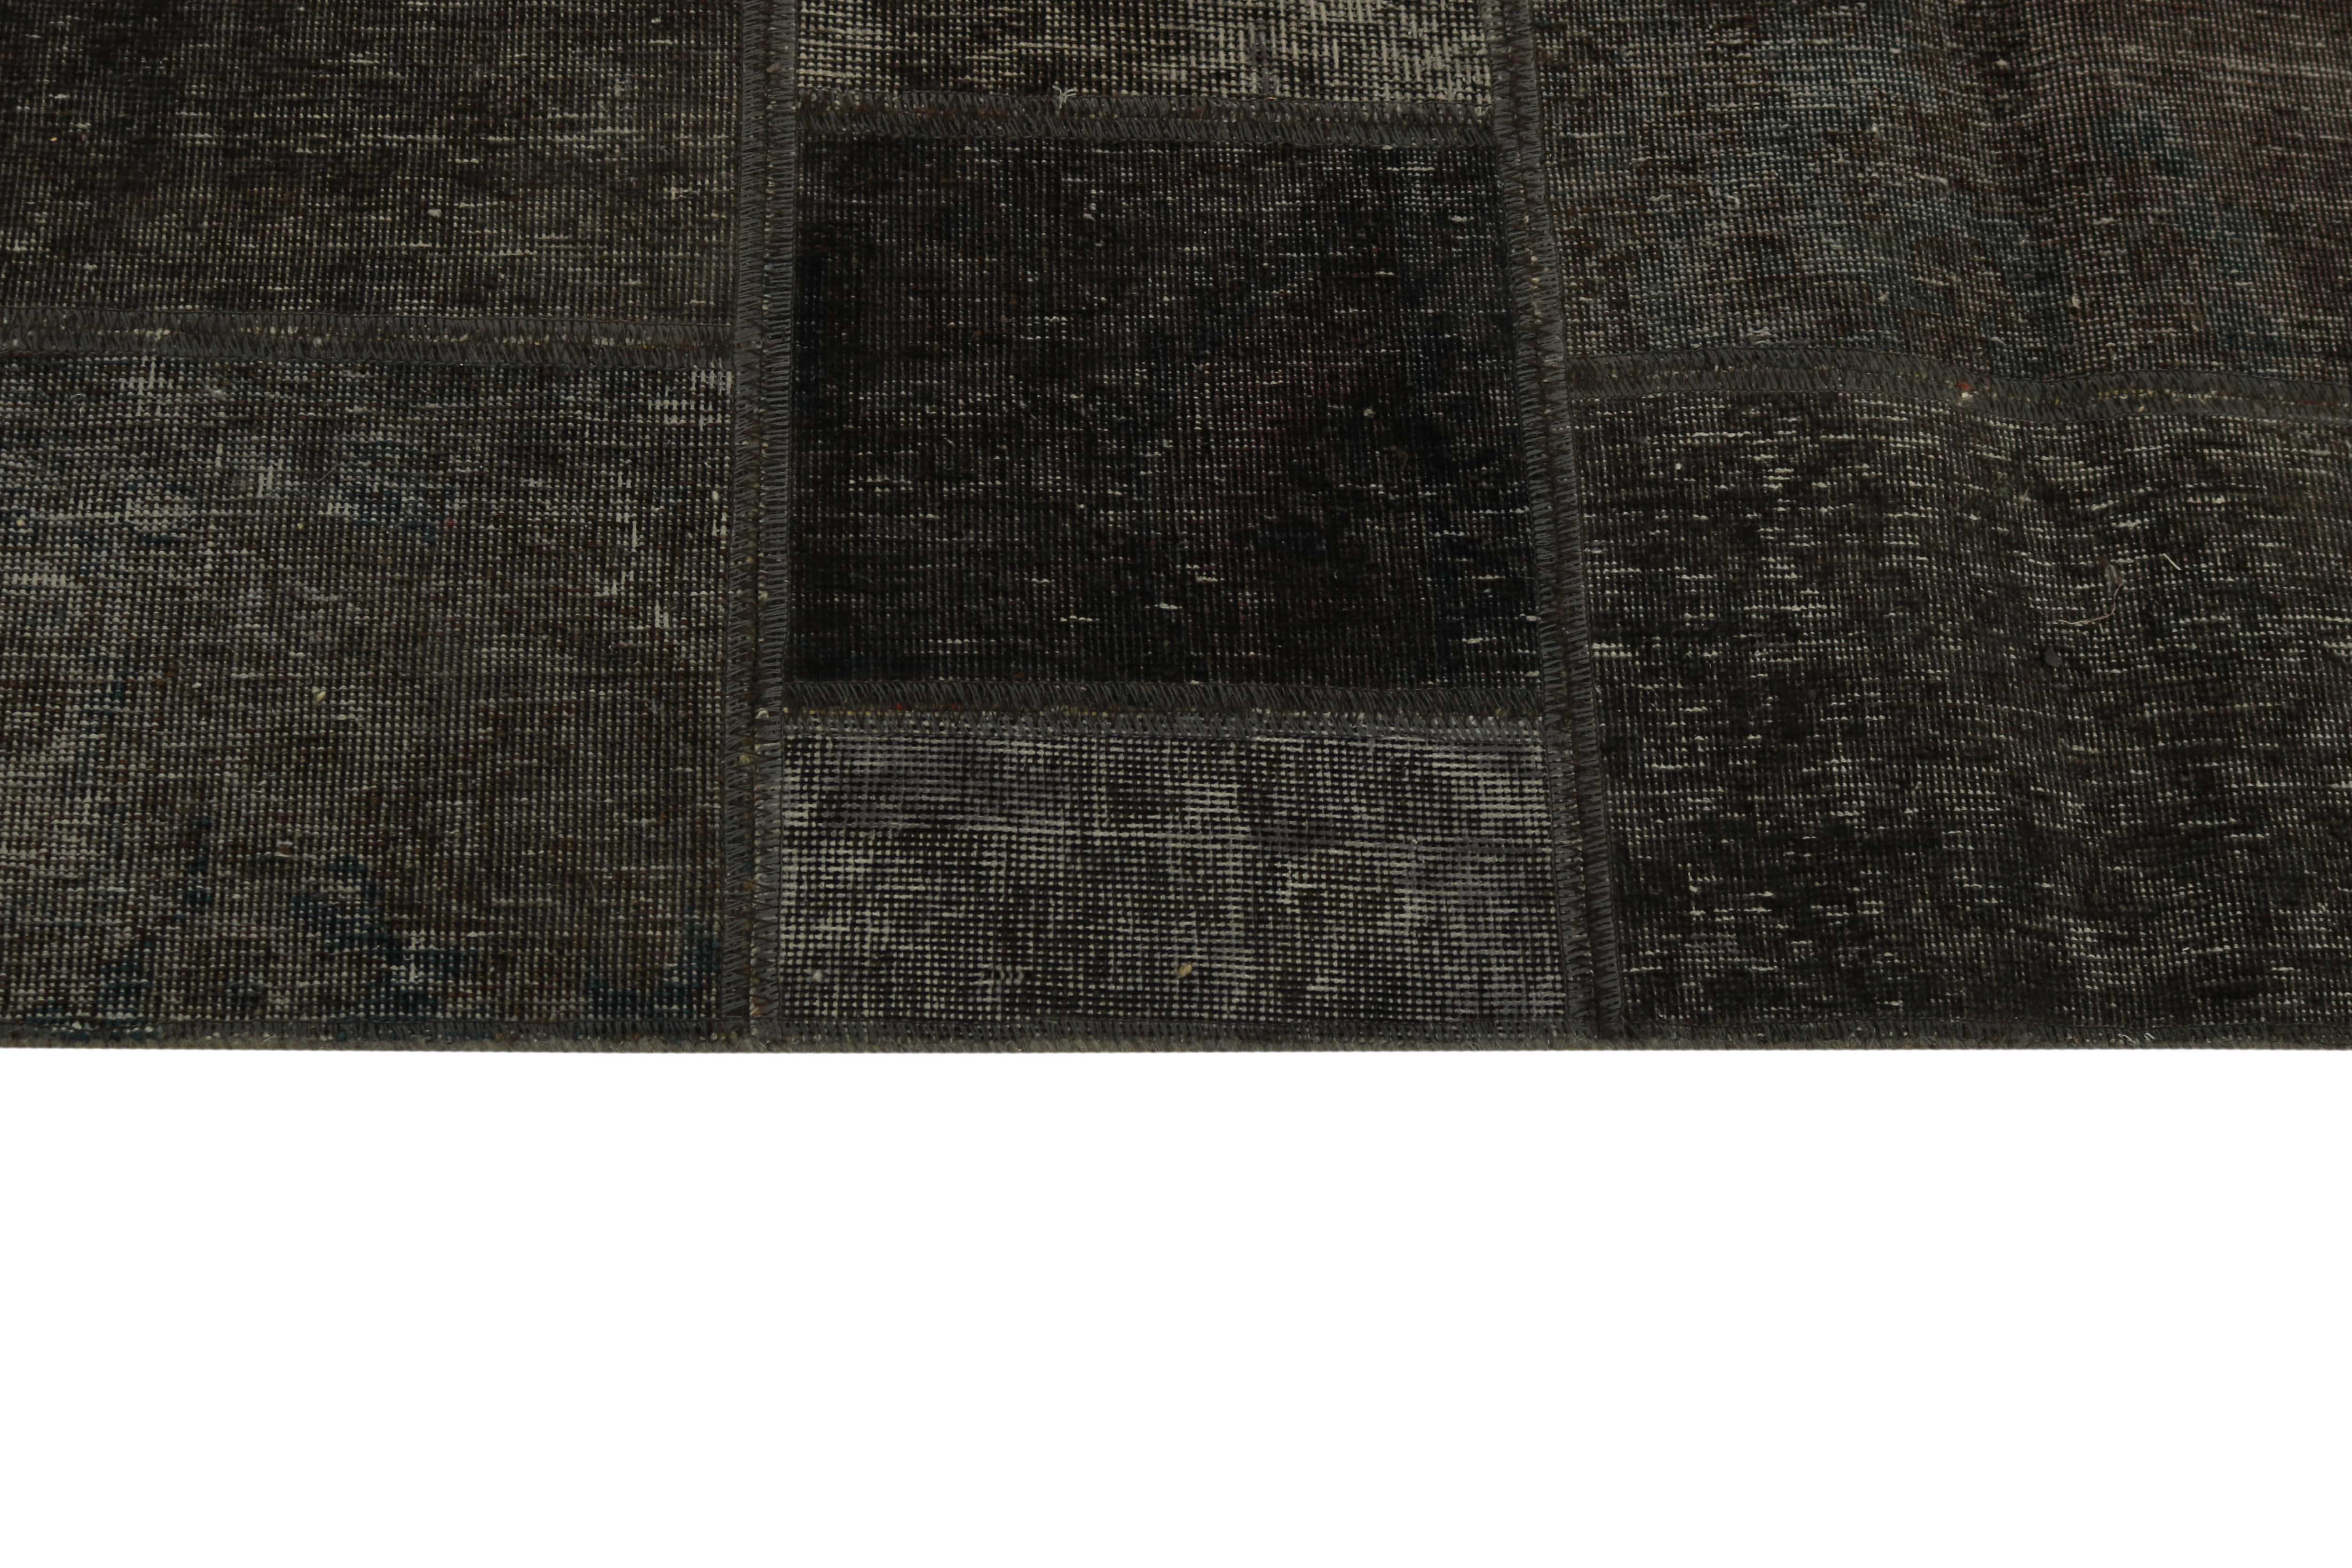 Authentic black patchwork persian rug